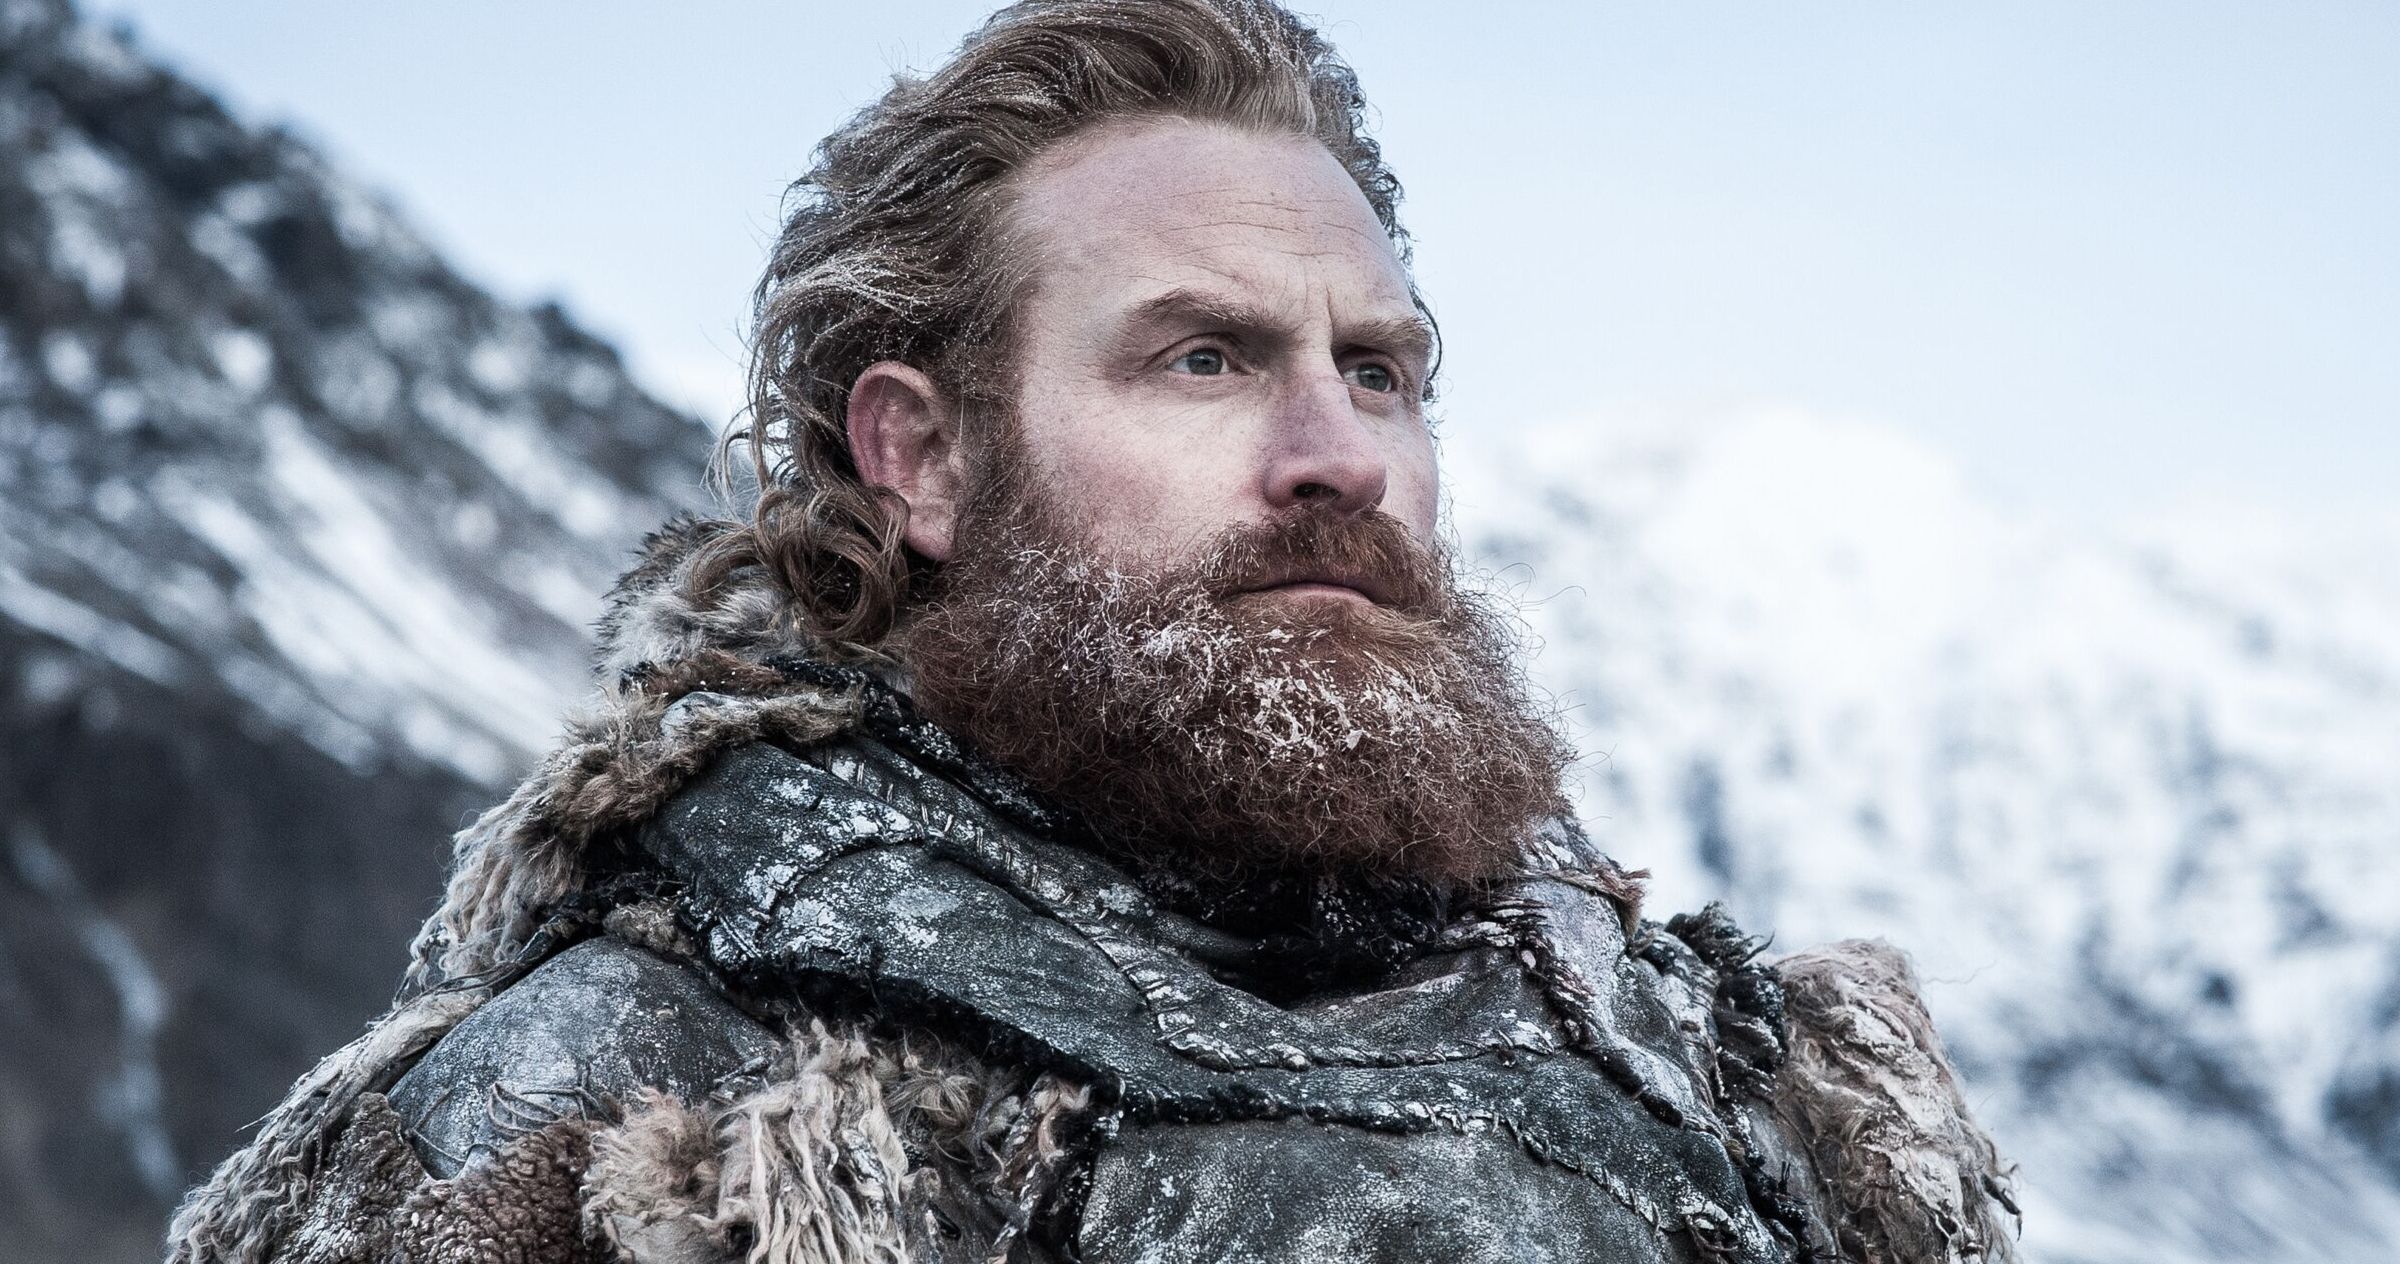 The Witcher Season 2 Brings in Game of Thrones Star Kristofer Hivju